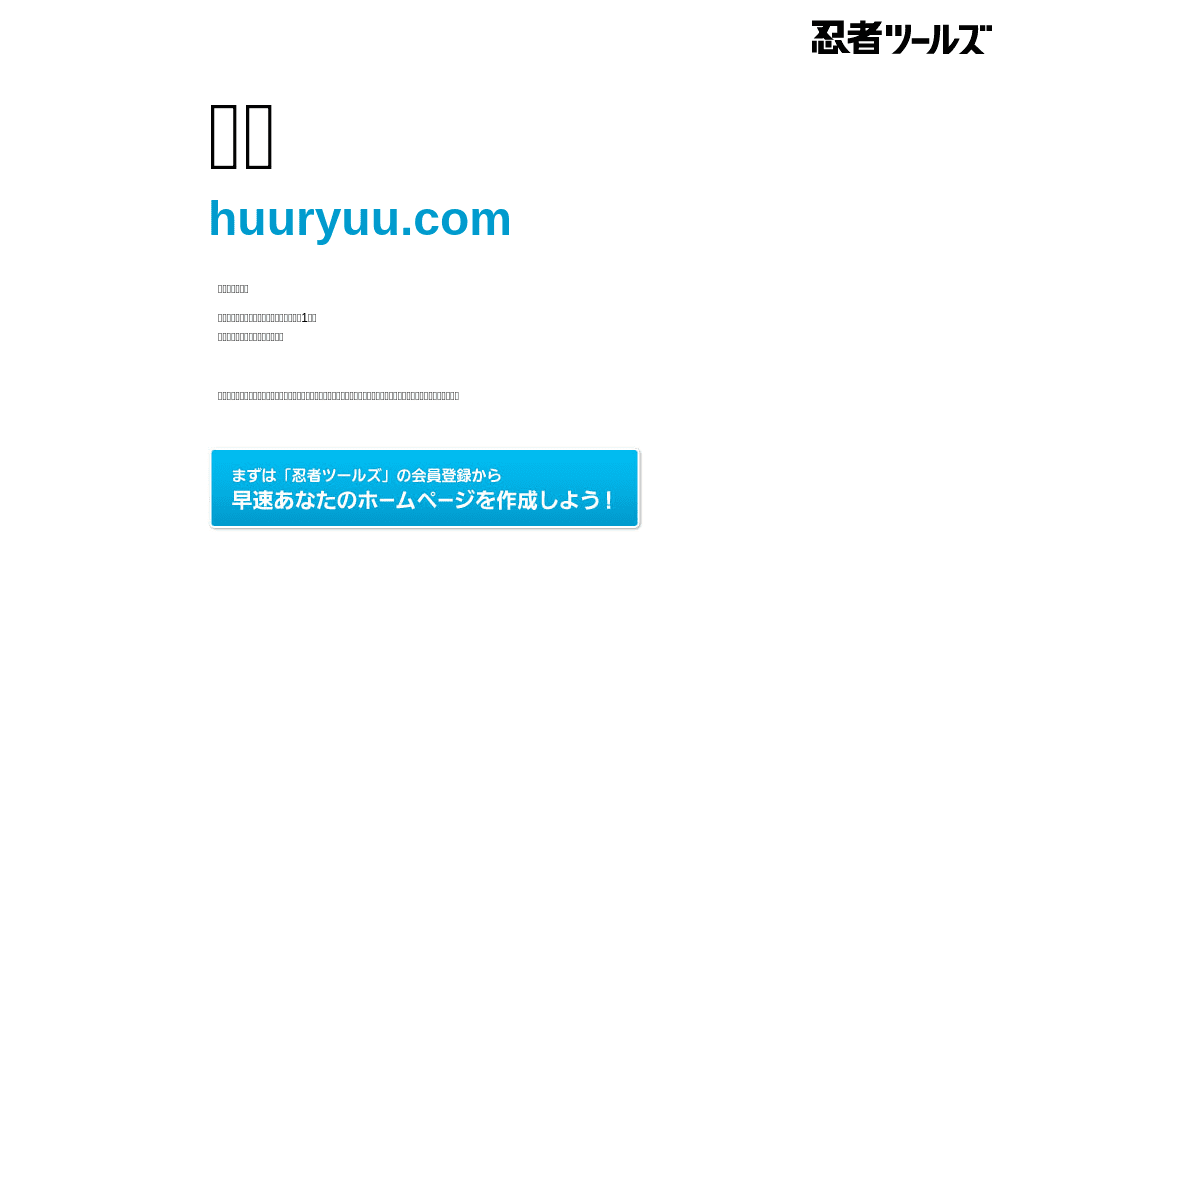 A complete backup of https://huuryuu.com